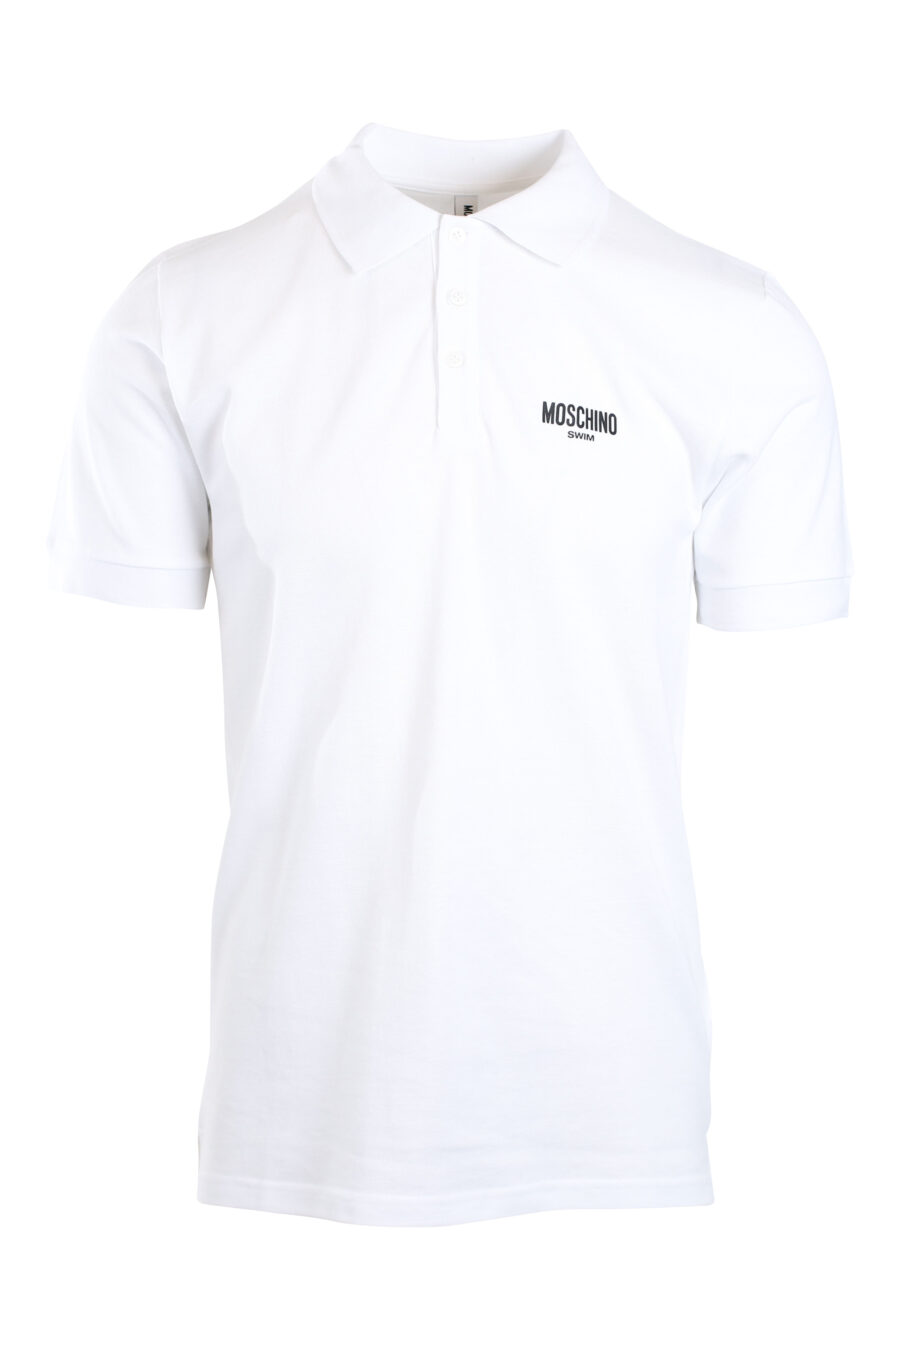 Polo blanc avec mini-logo noir "swim" - IMG 2179